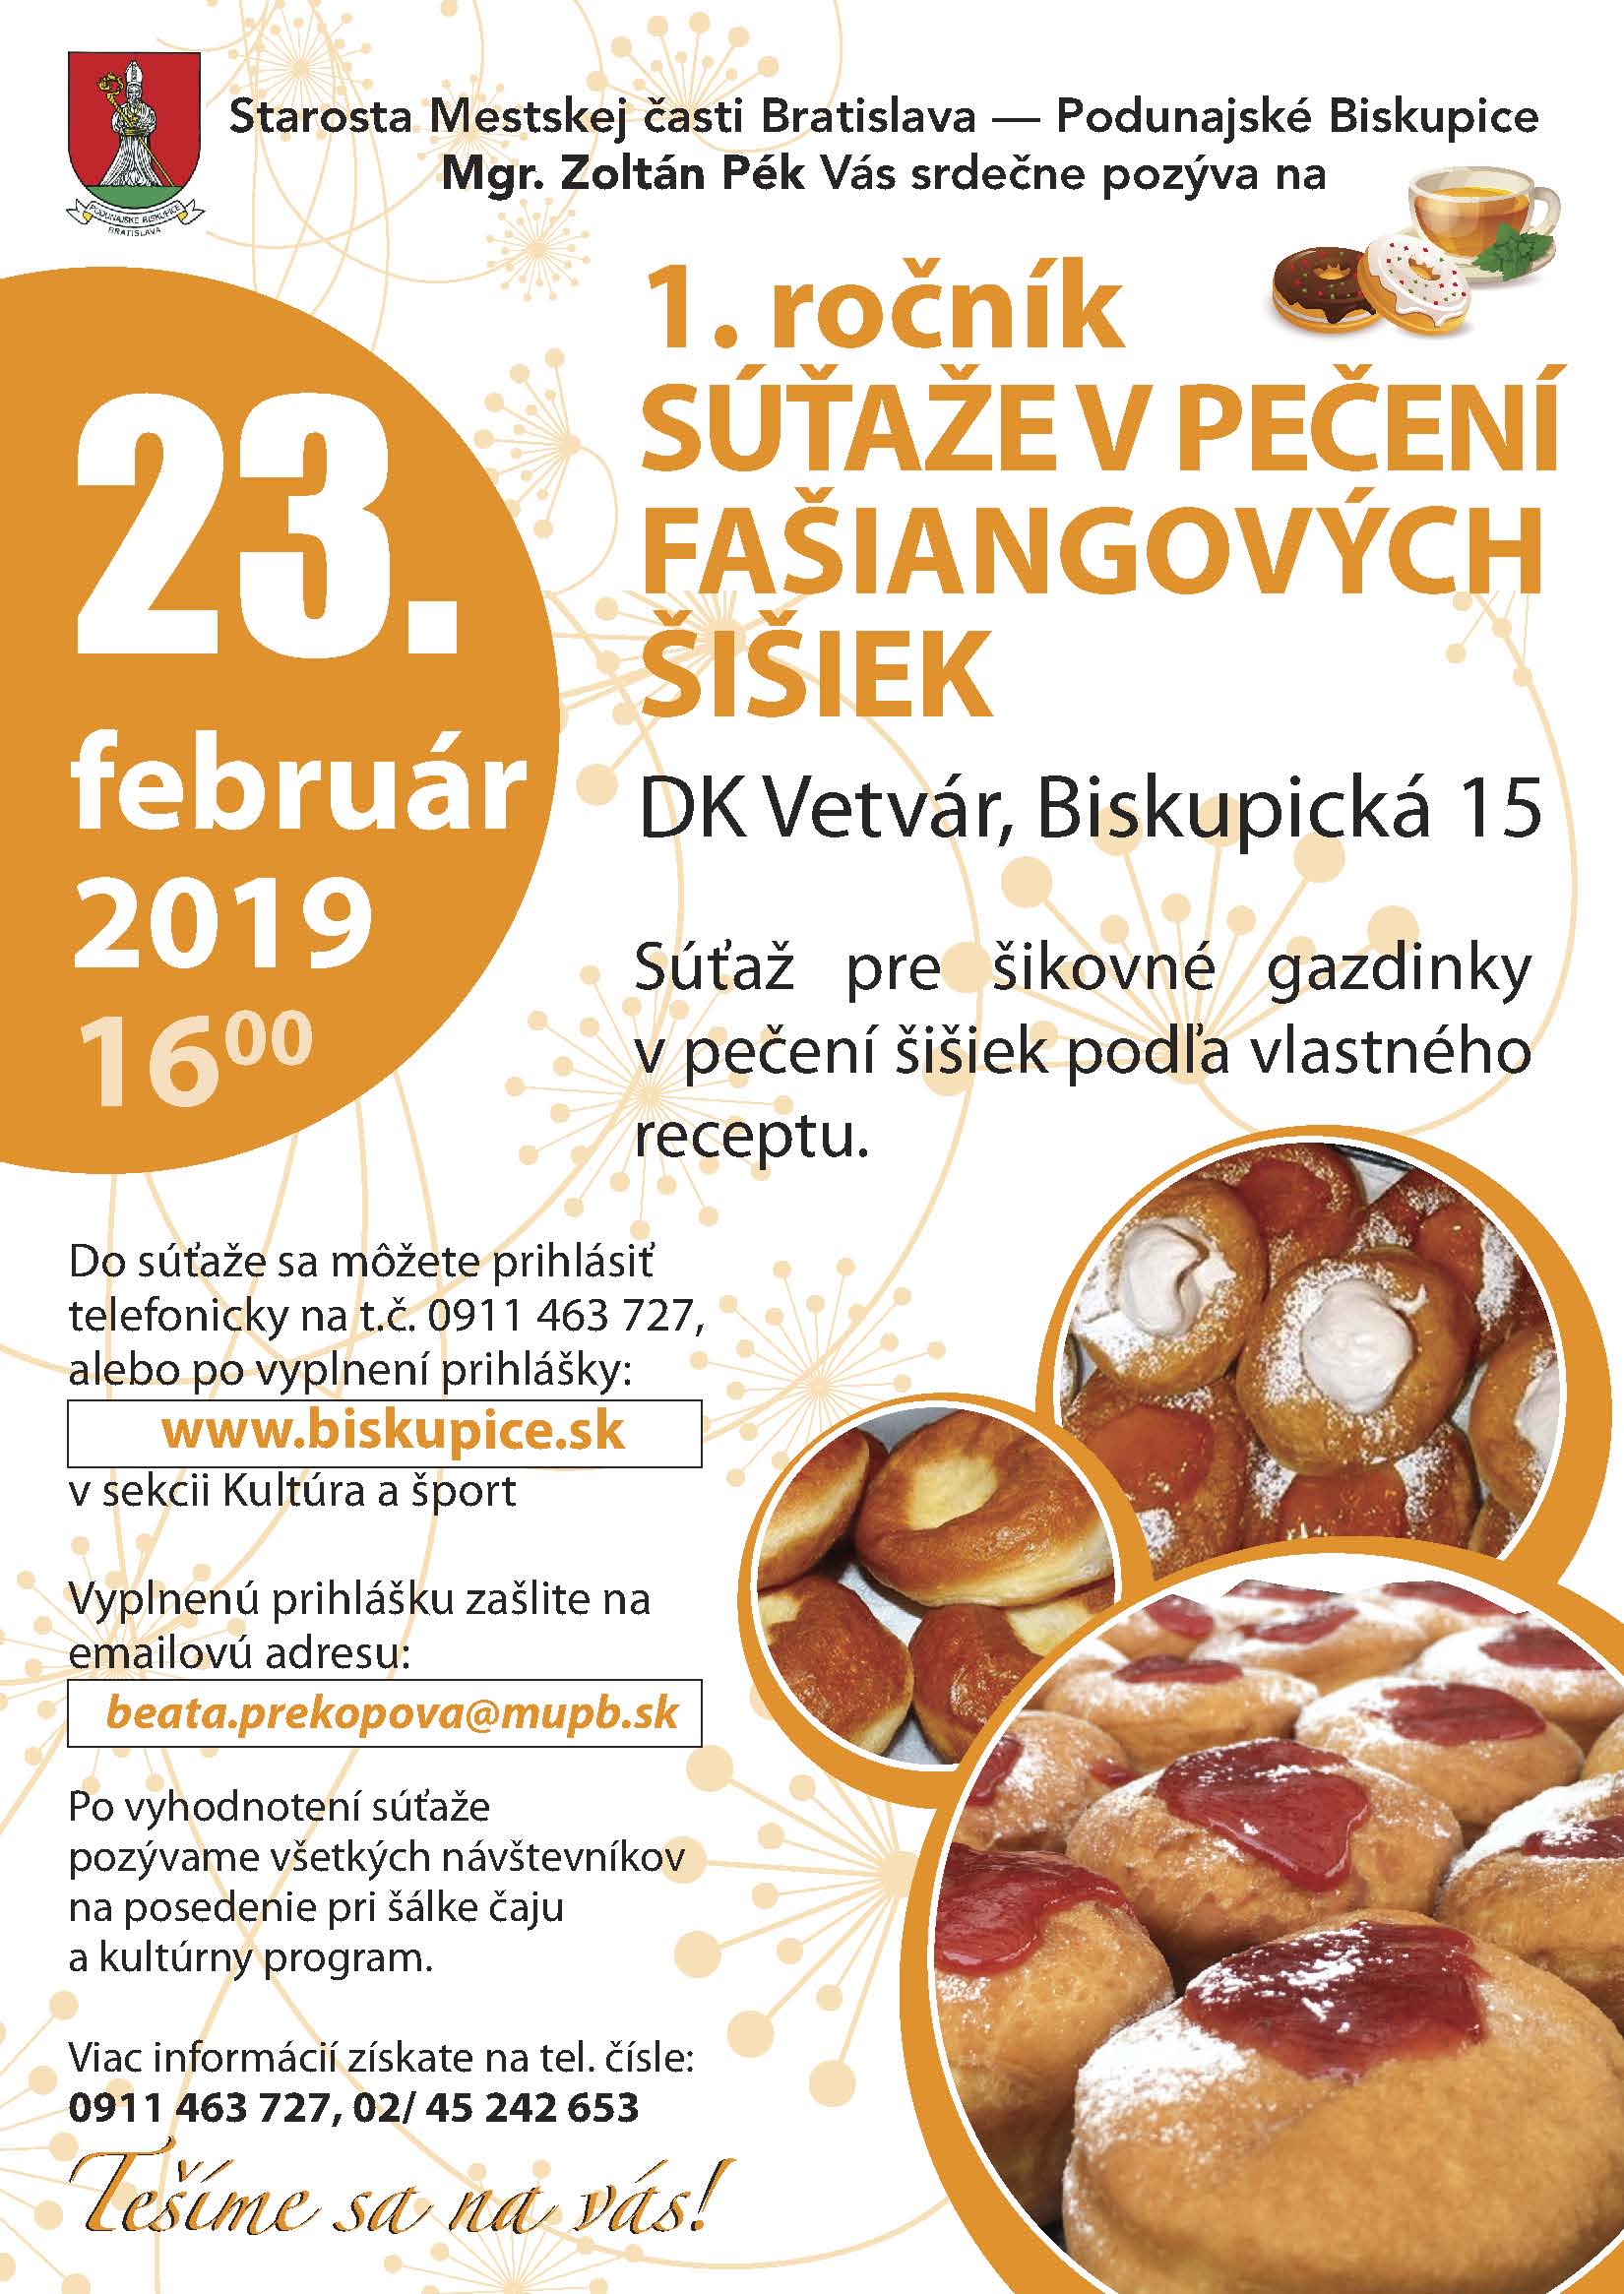 Sa v peen faiangovch iiek 2019 Podunajsk Biskupice - 1. ronk